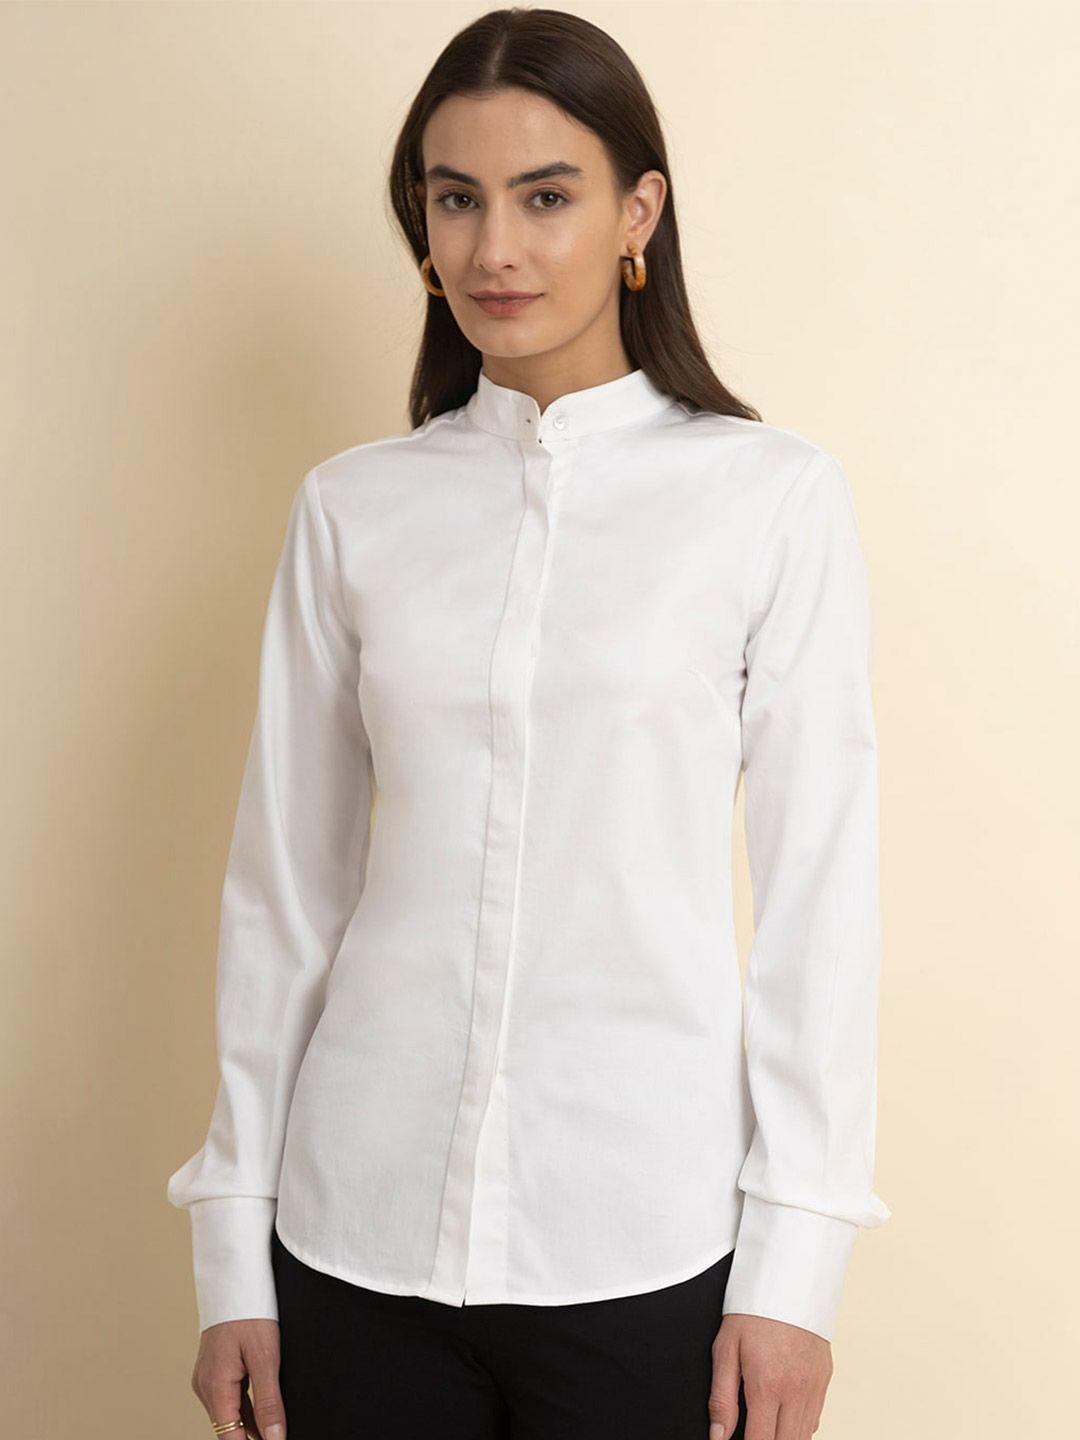 fablestreet classic mandarin collar slim fit cotton casual shirt